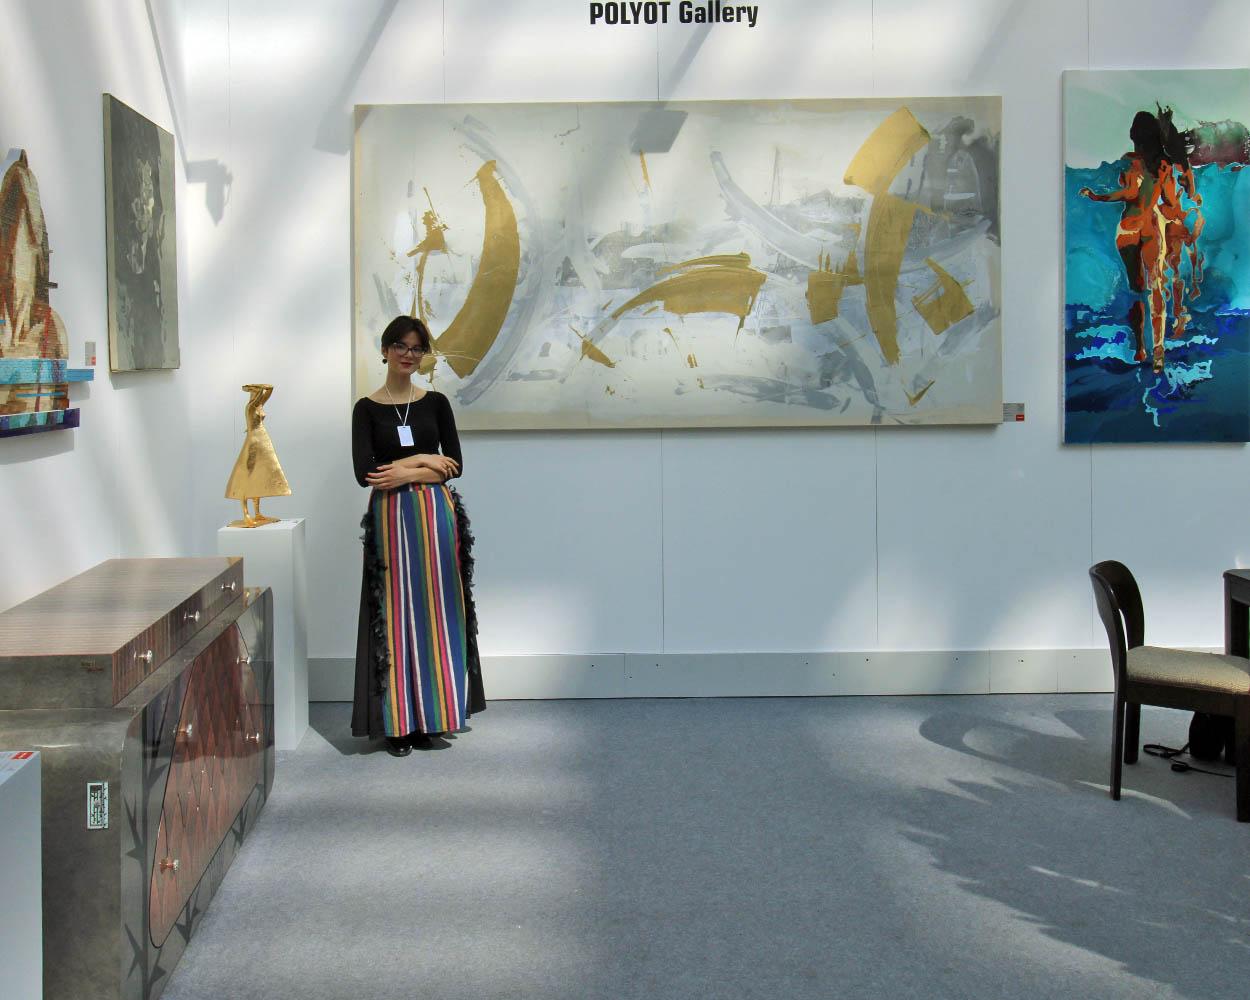 Polyot Gallery